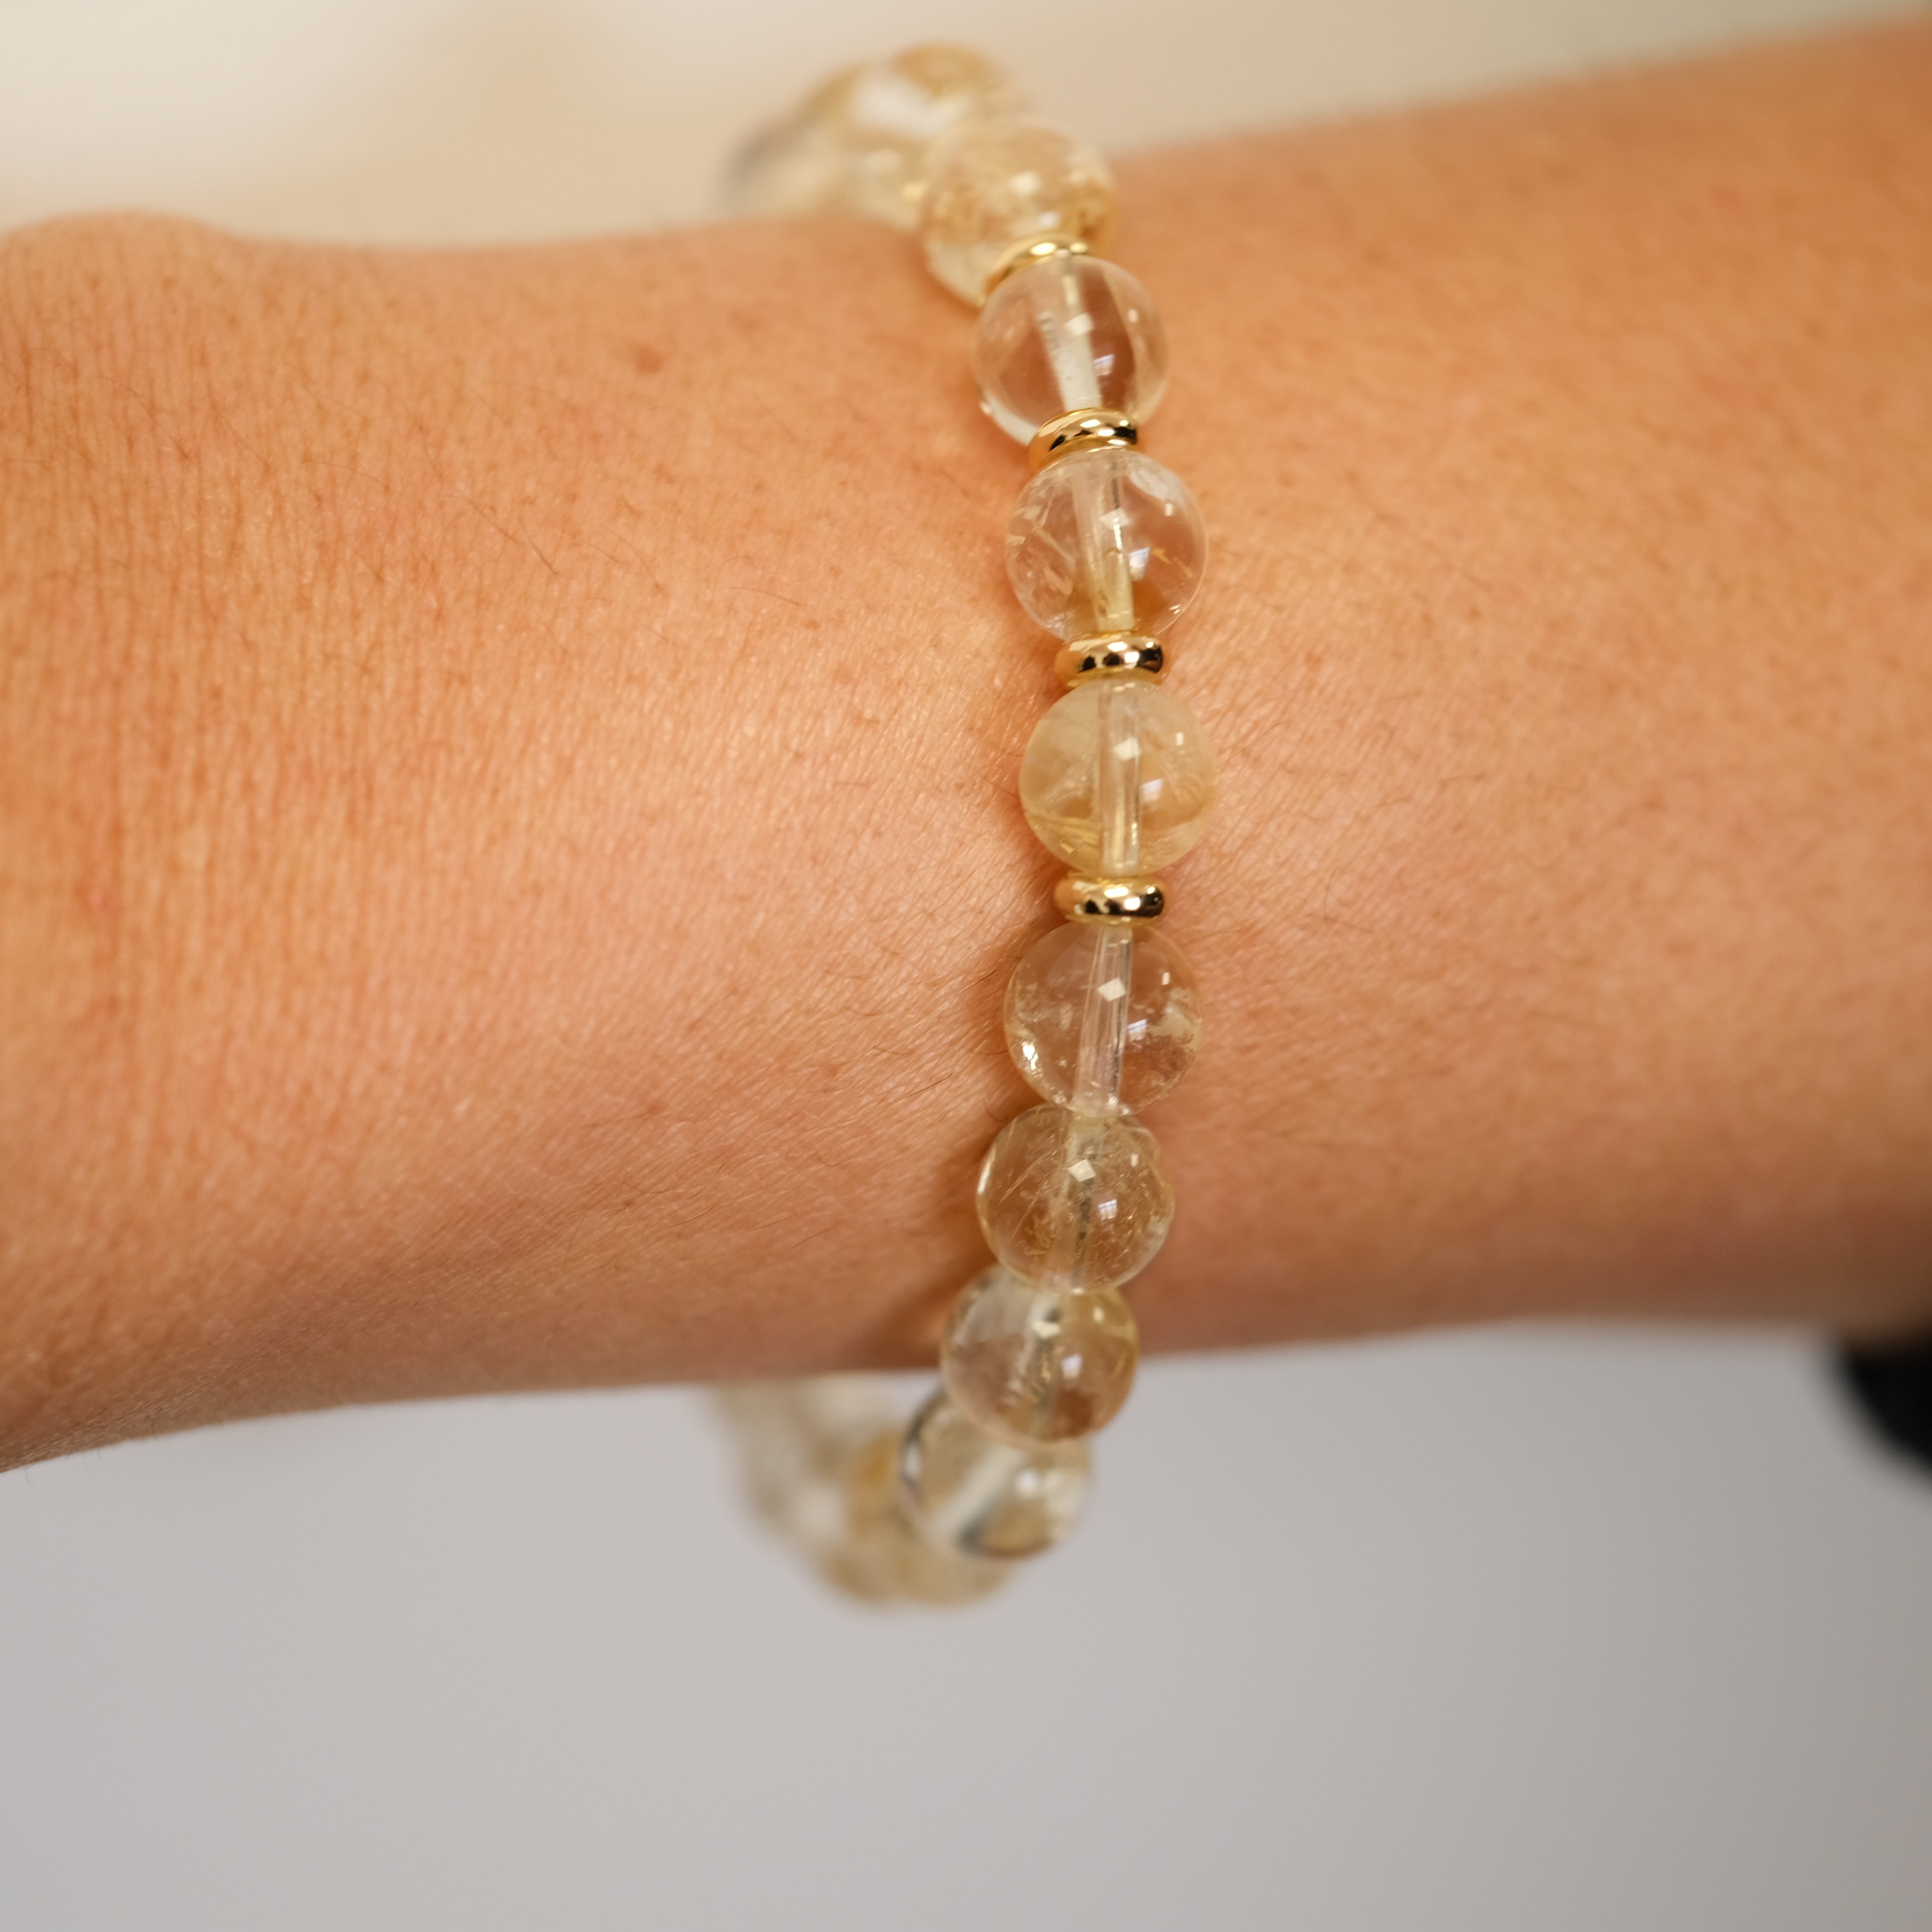 Citrine gemstone bracelet with gold accessories worn on a model's wrist